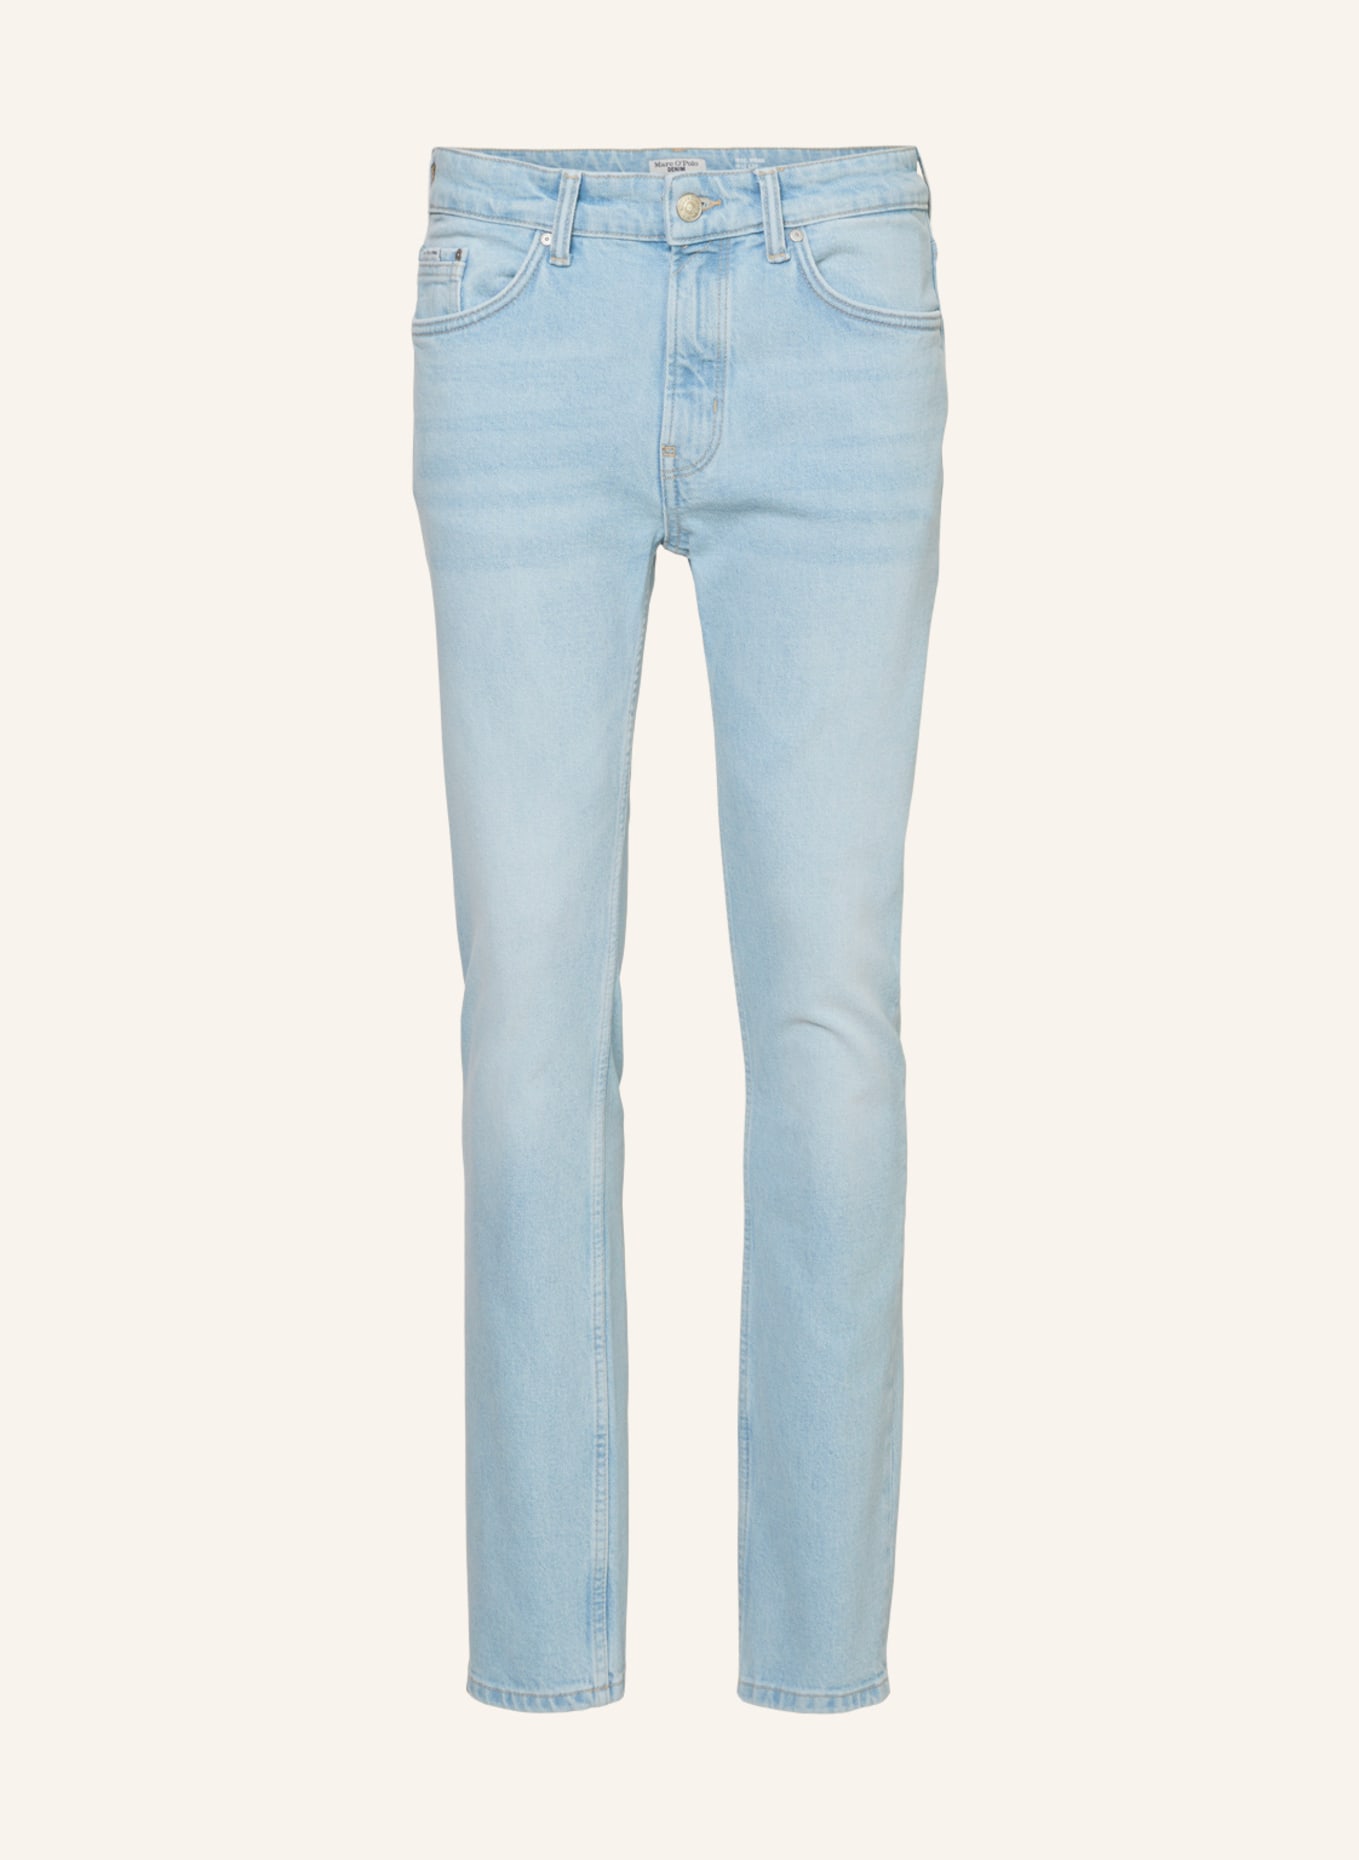 Marc O'Polo DENIM Jeans Modell VIDAR slim, Farbe: BLAU (Bild 1)